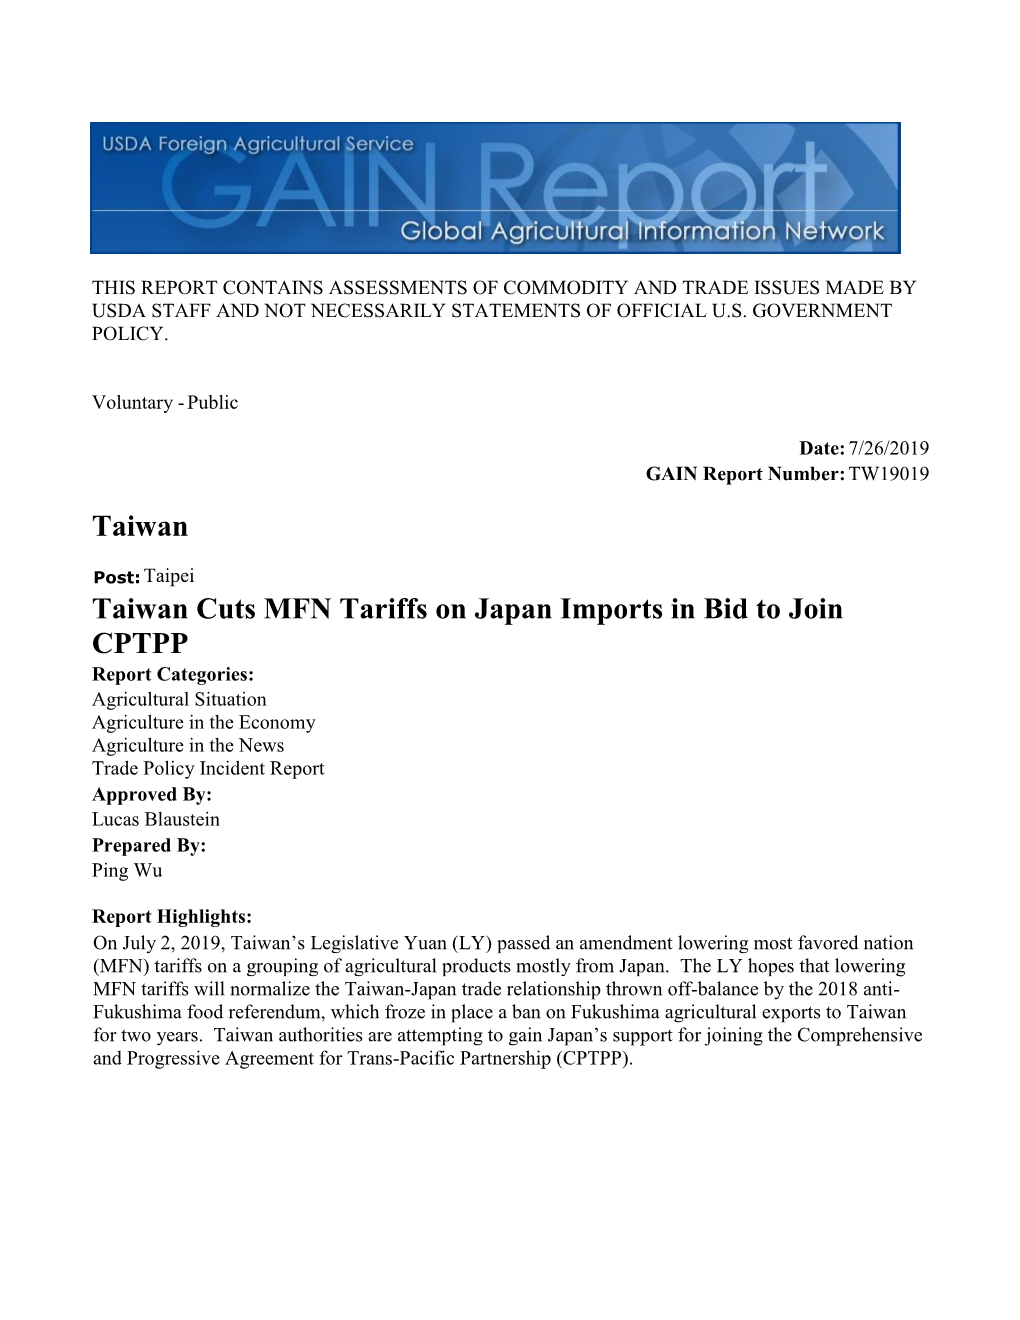 Taiwan Cuts MFN Tariffs on Japan Imports in Bid to Join CPTPP